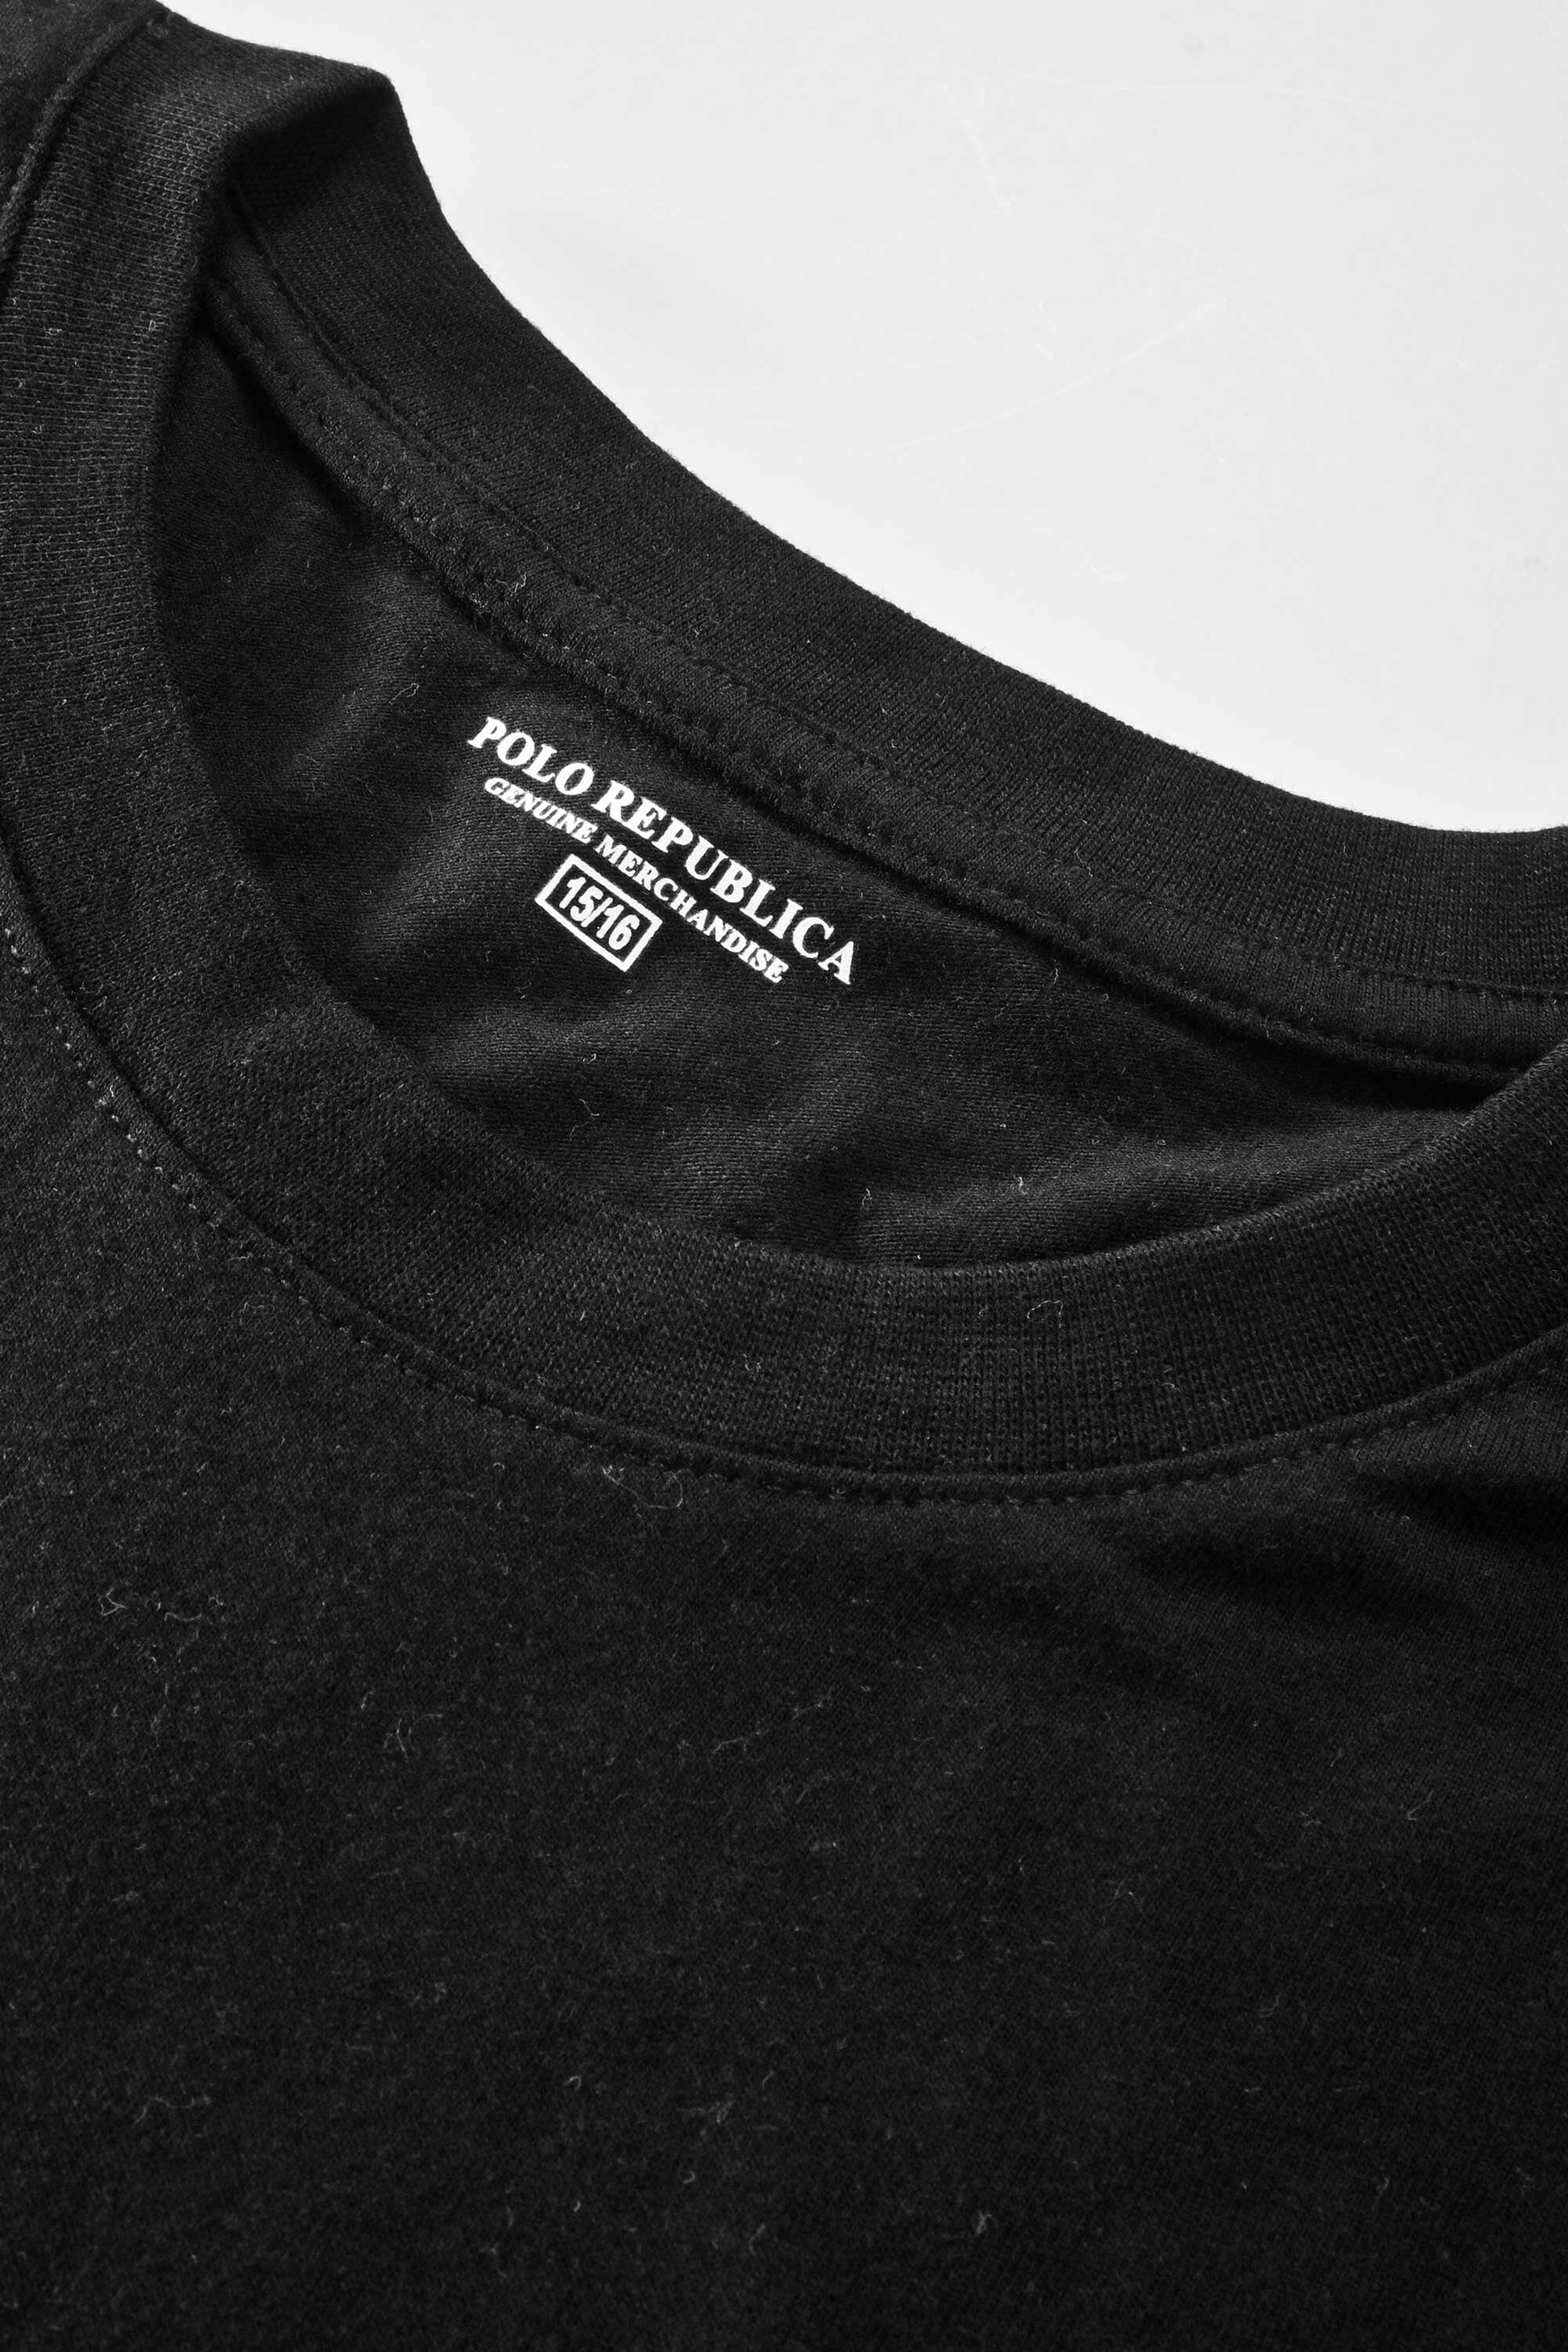 Polo Republica Boy's Urban Street Printed Tee Shirt Boy's Tee Shirt Polo Republica 